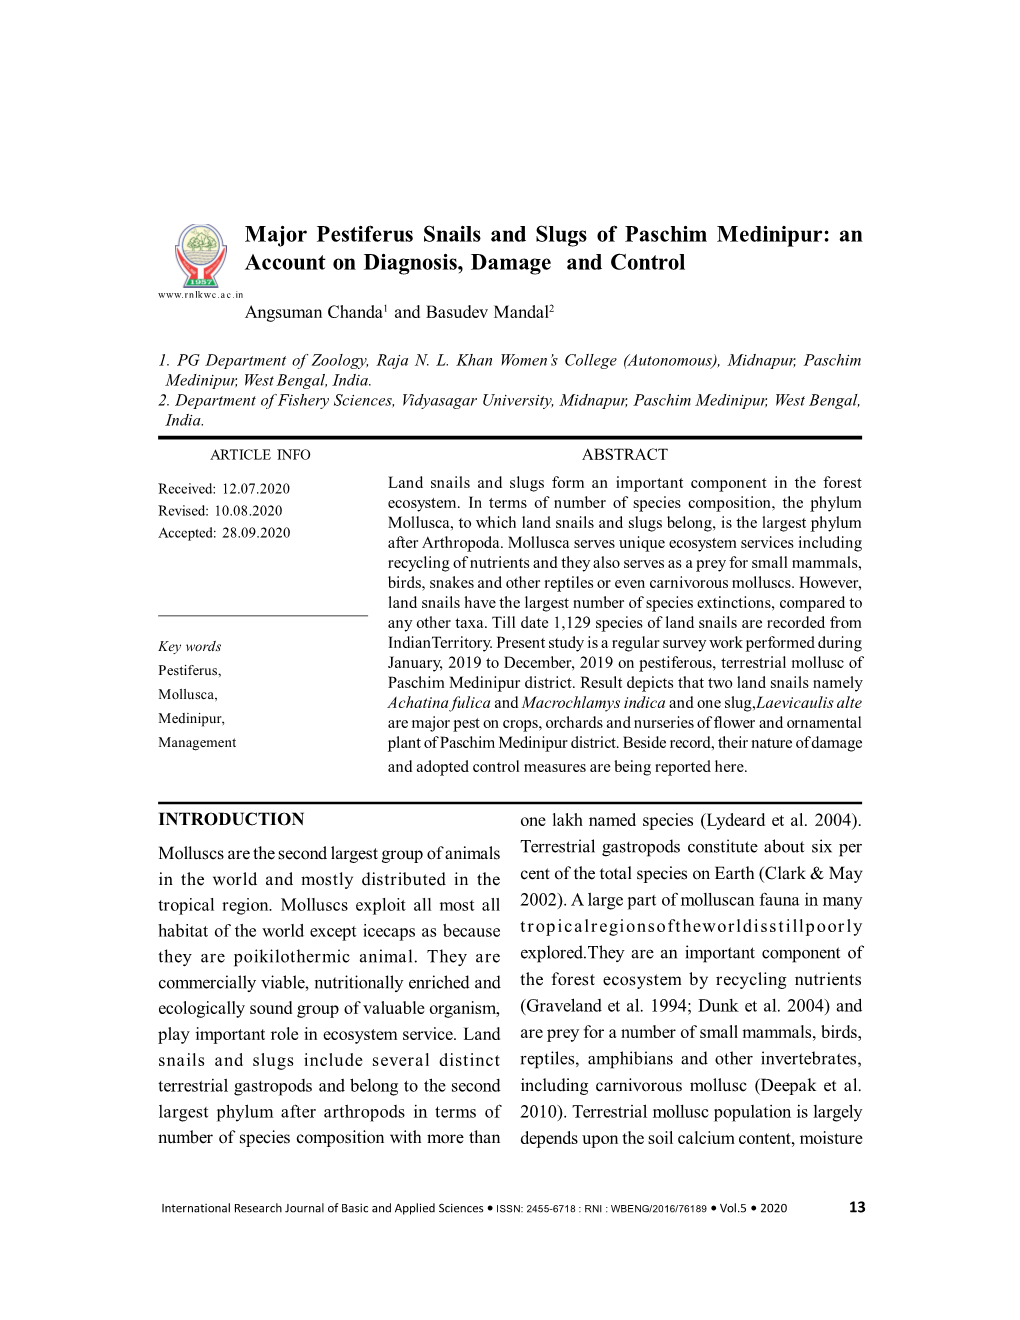 Major Pestiferus Snails and Slugs of Paschim Medinipur: an Account on Diagnosis, Damage and Control Angsuman Chanda1 and Basudev Mandal2